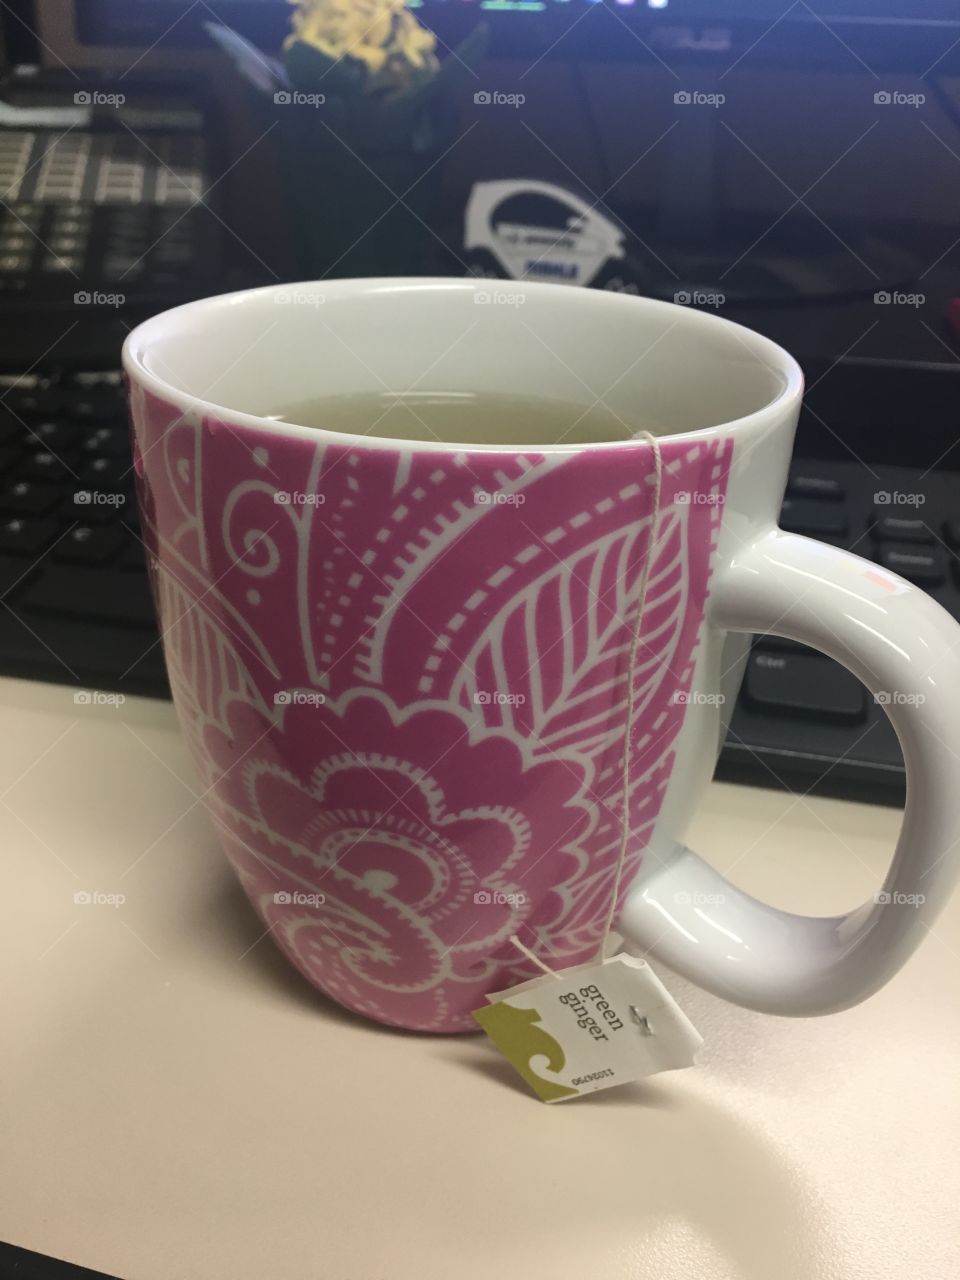 Tea at work